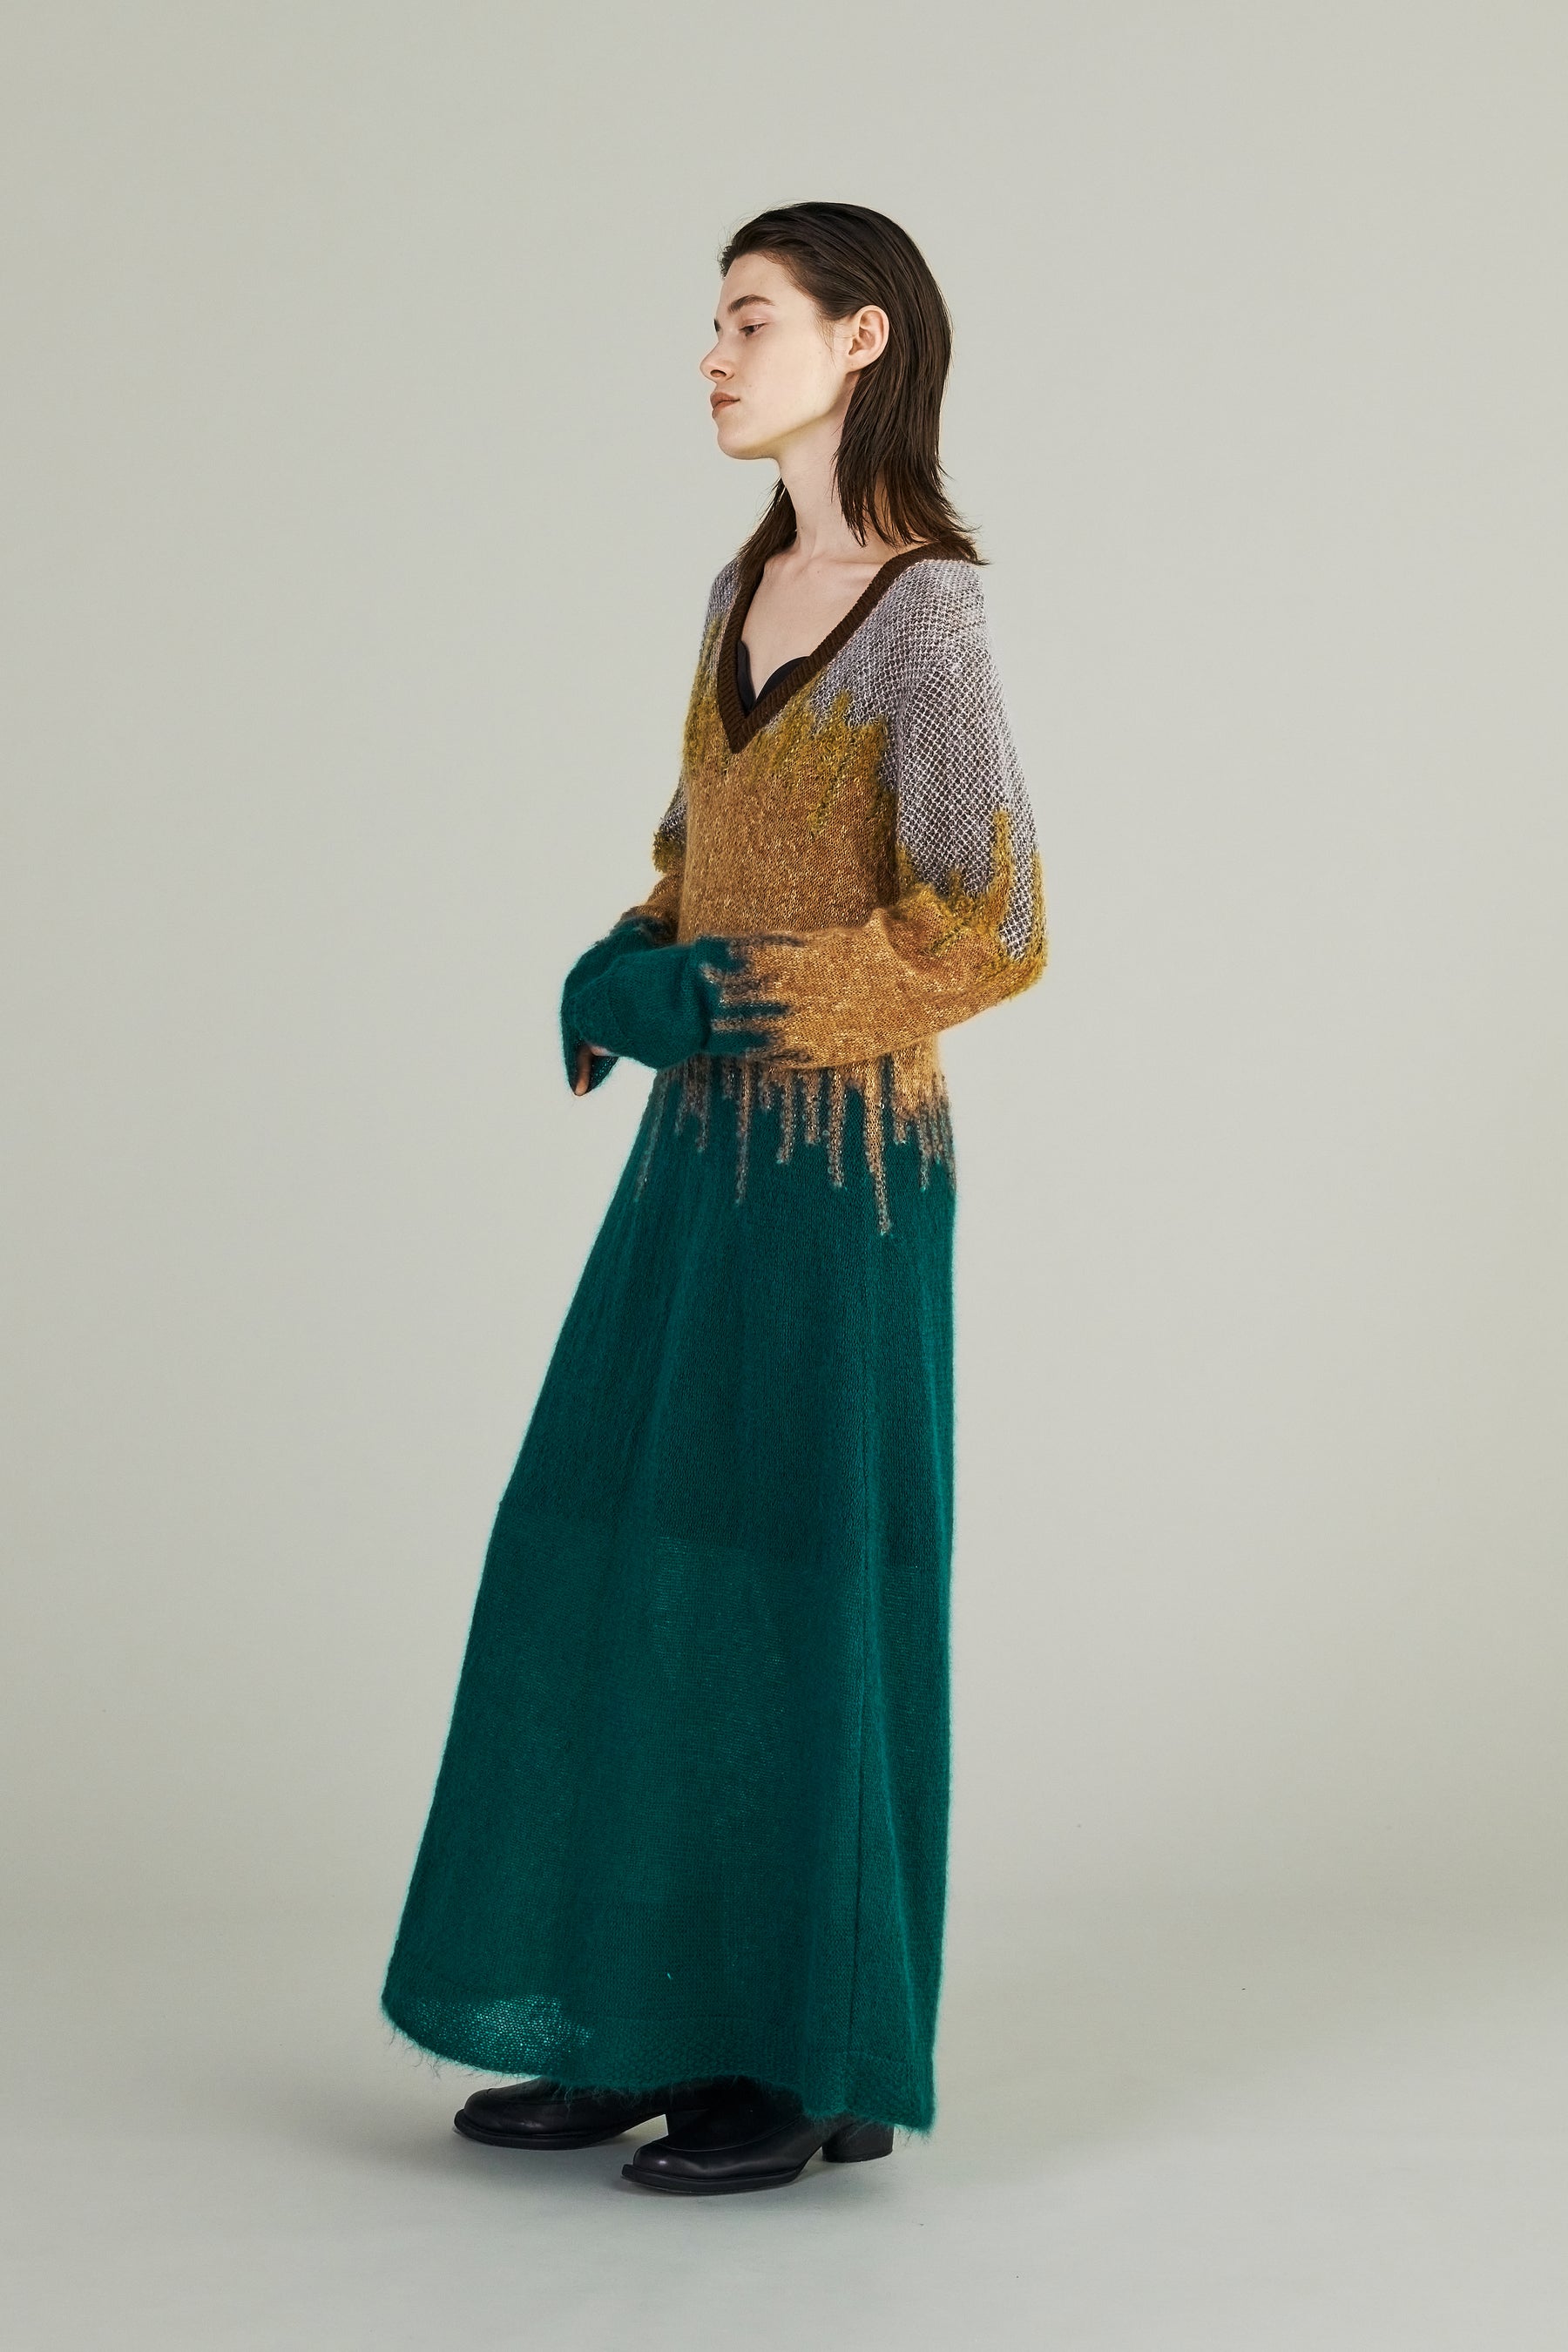 Water mirror knit dress (Green)